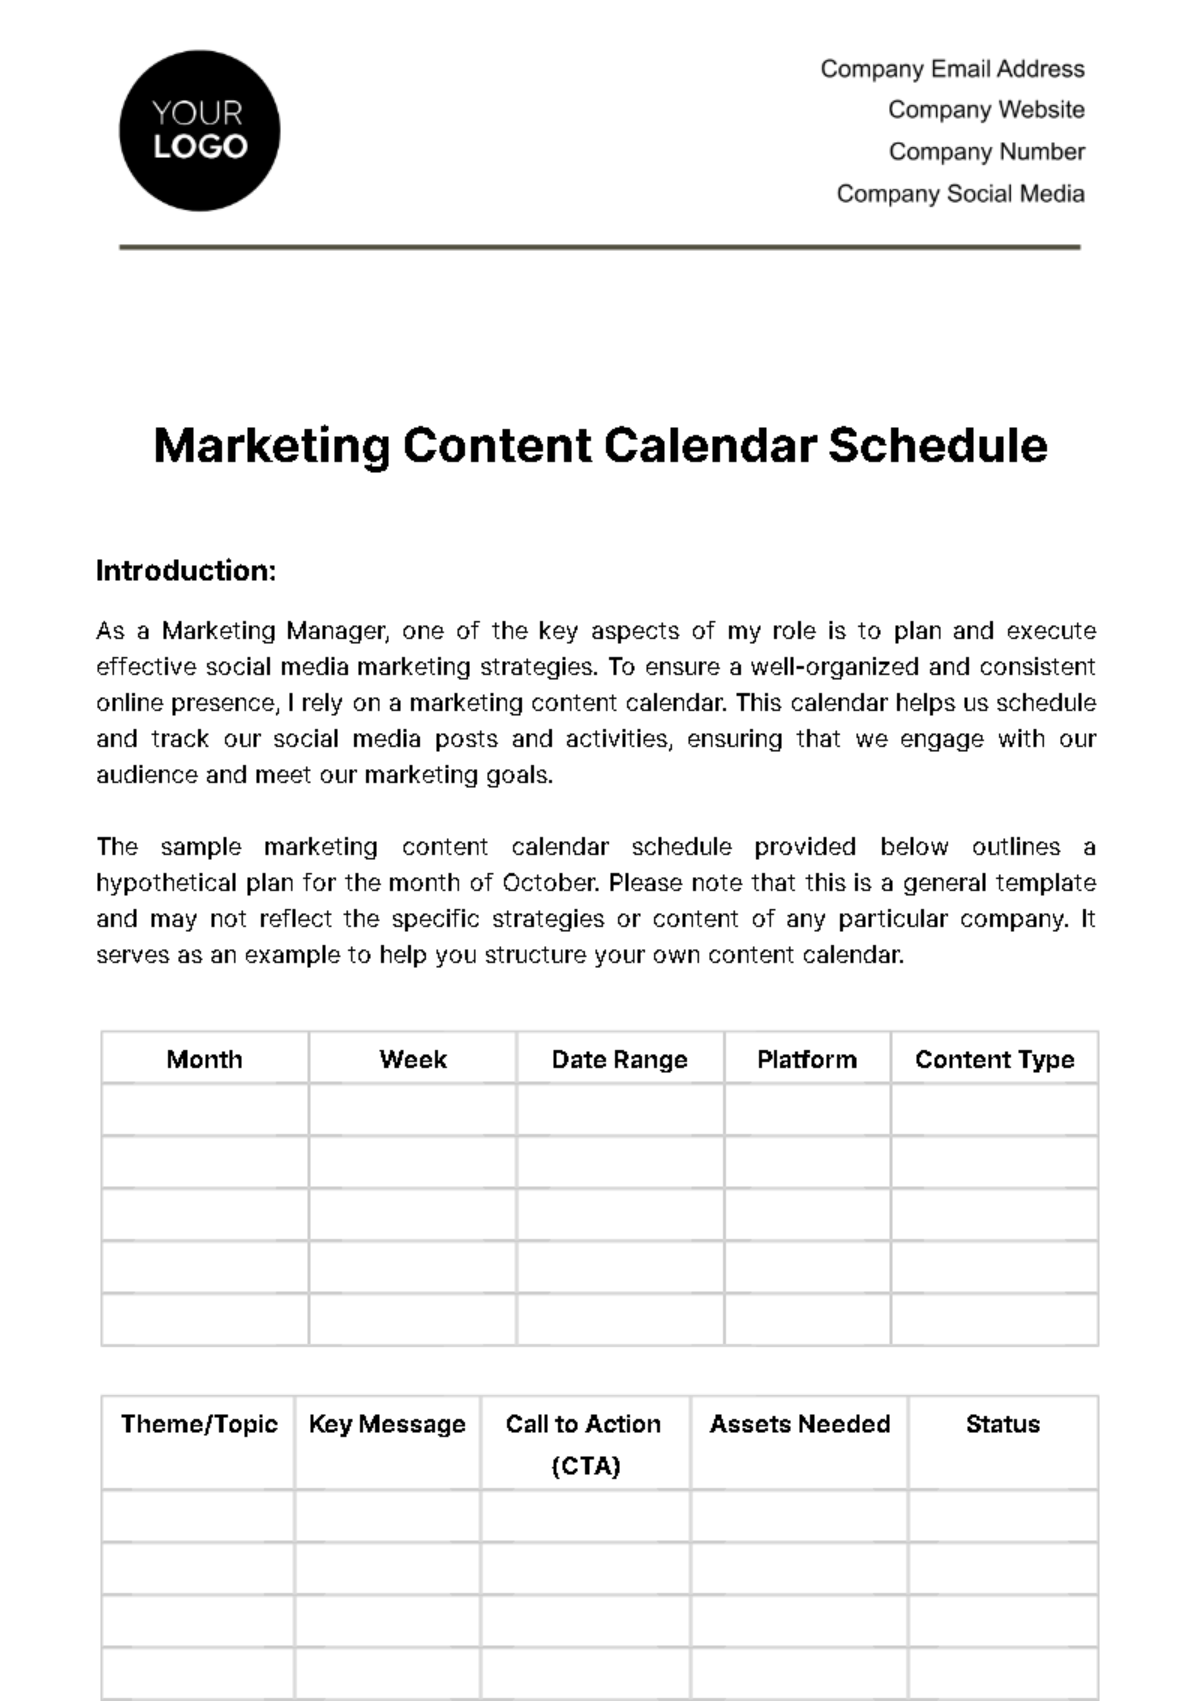 Free Marketing Content Calendar Schedule Template